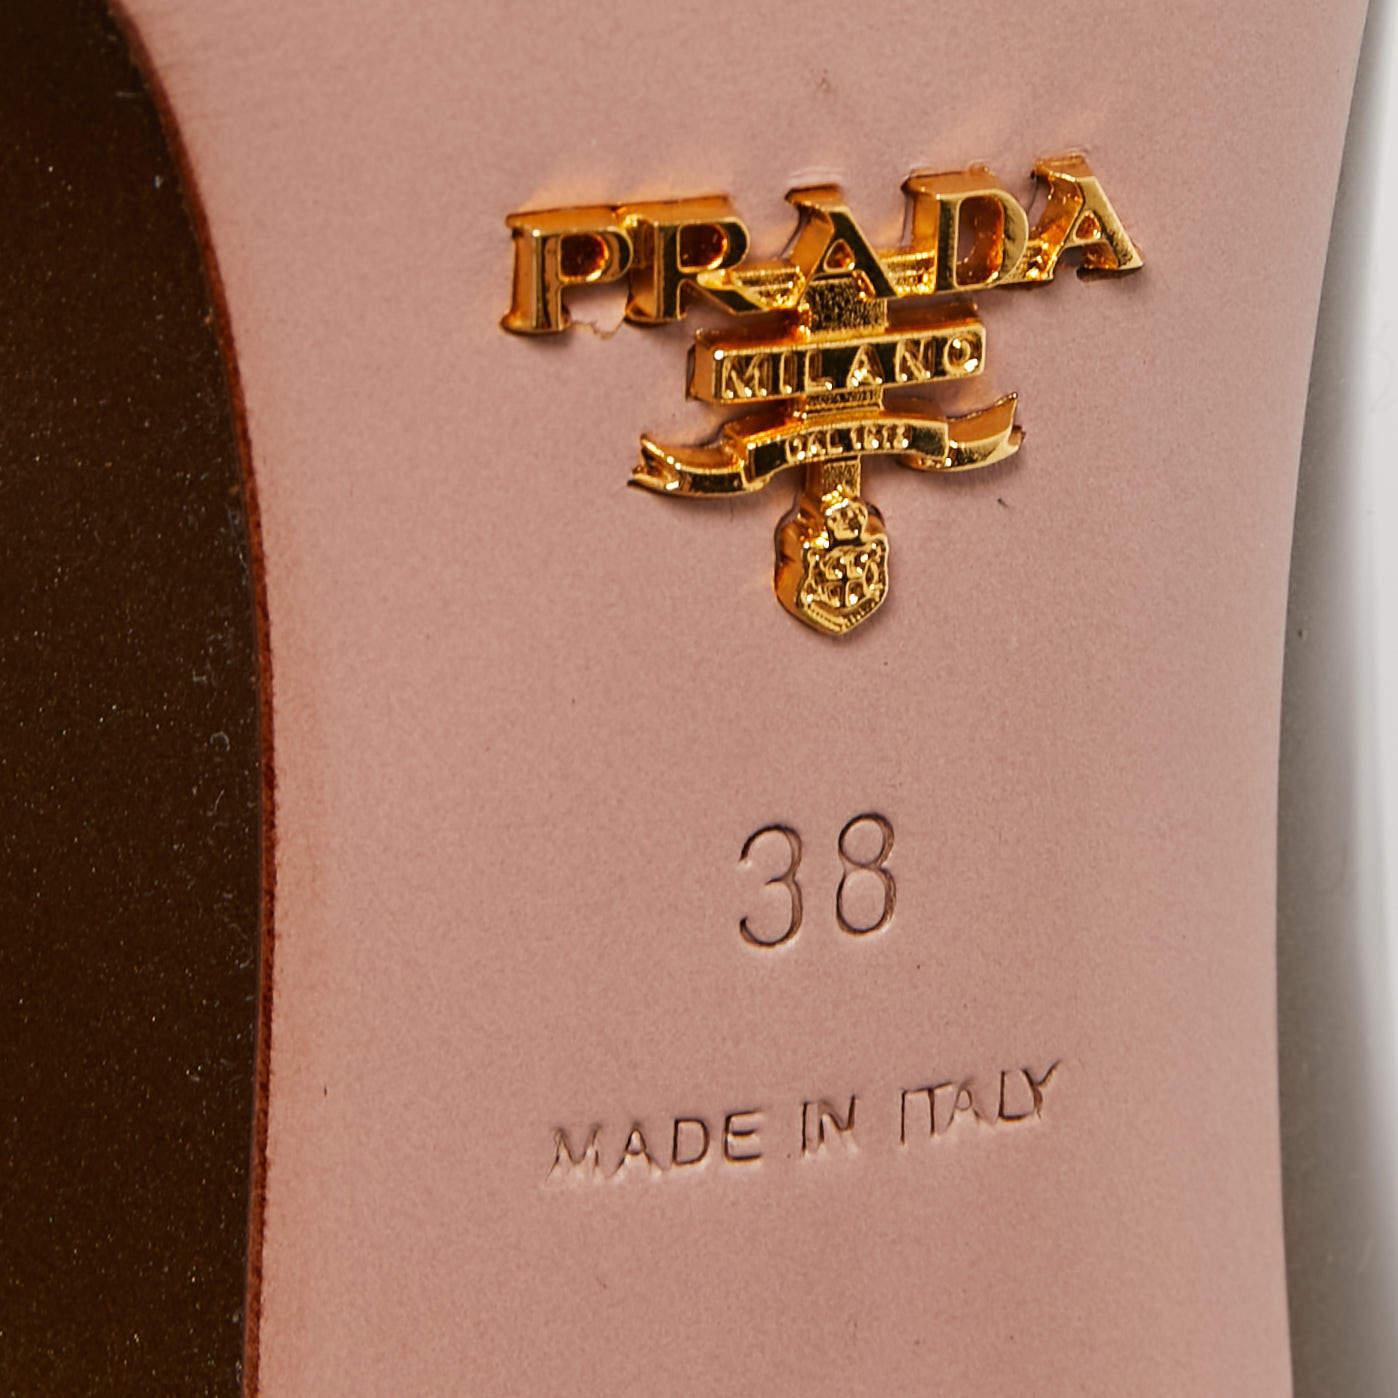 Prada Metallic Patent Leather Crystal Embellished Peep Toe Pumps Size 38 2